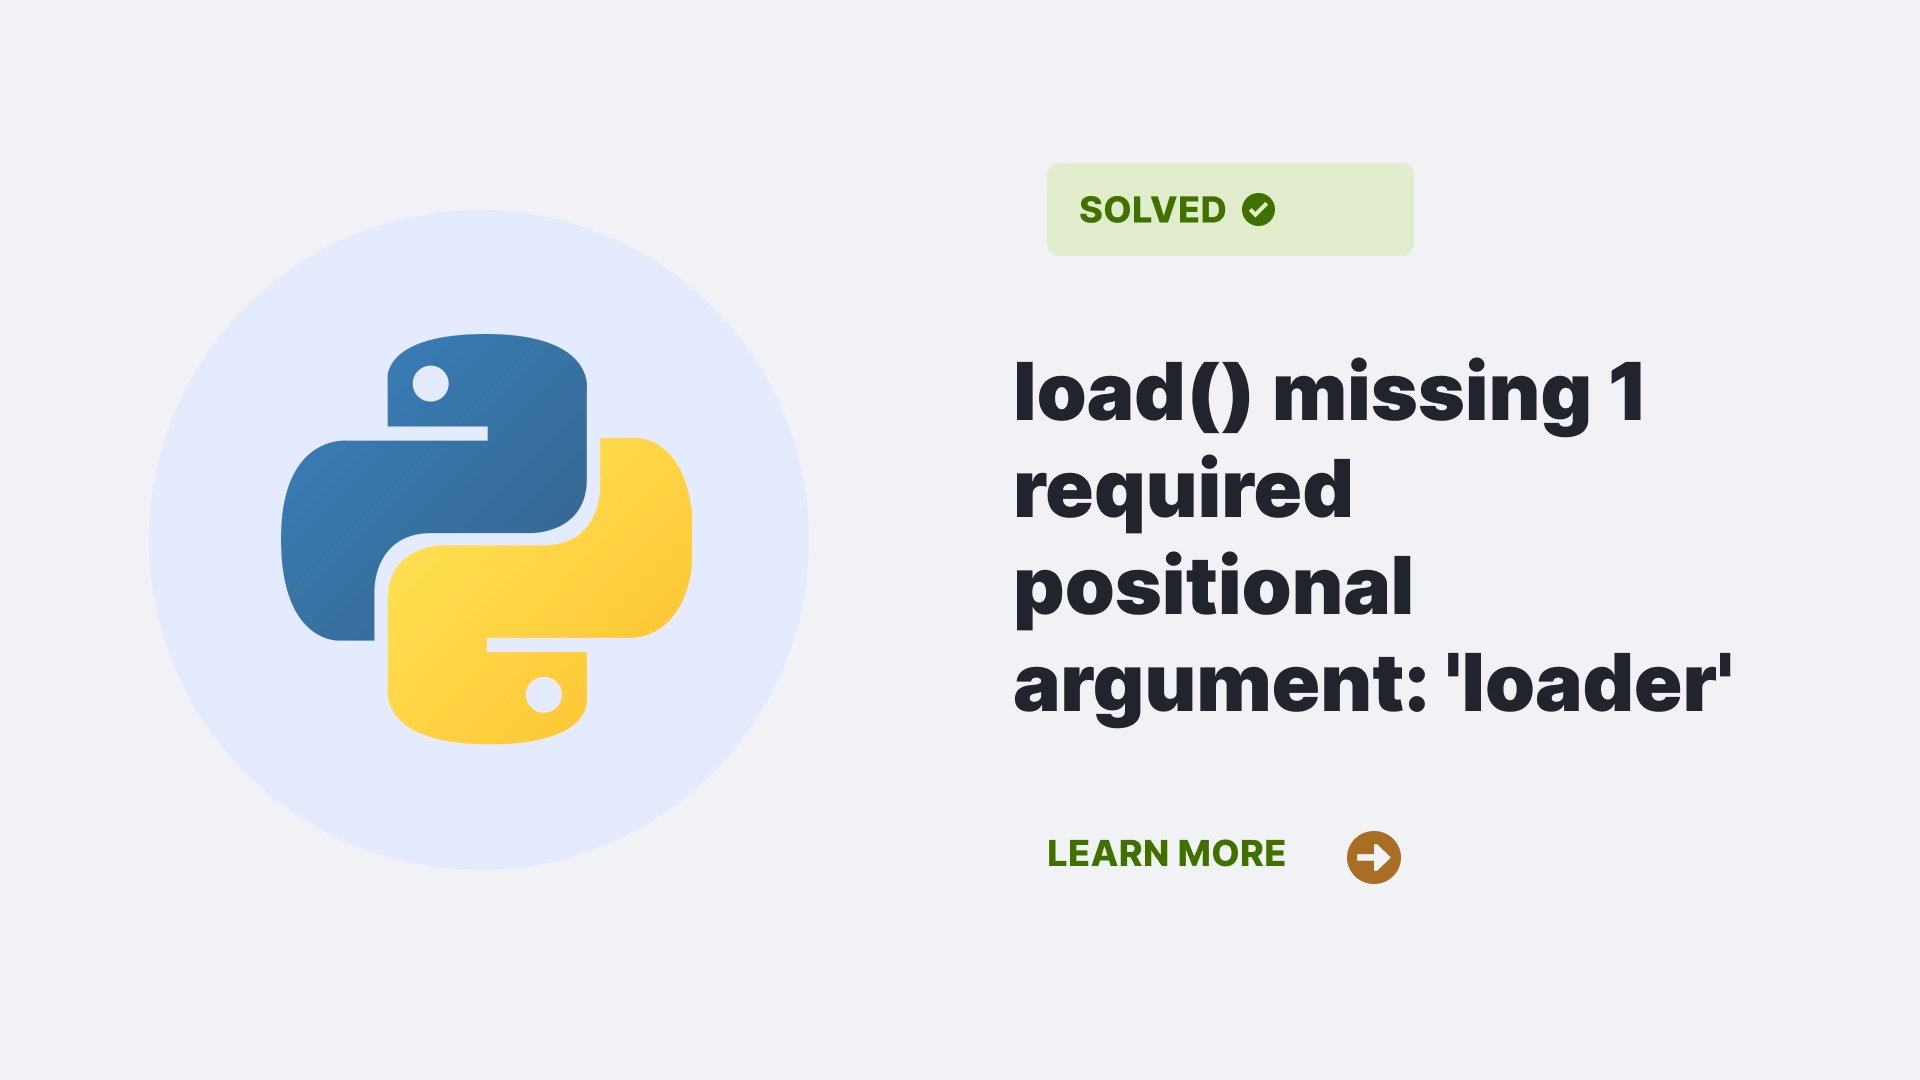 load() missing 1 required positional argument: 'loader'